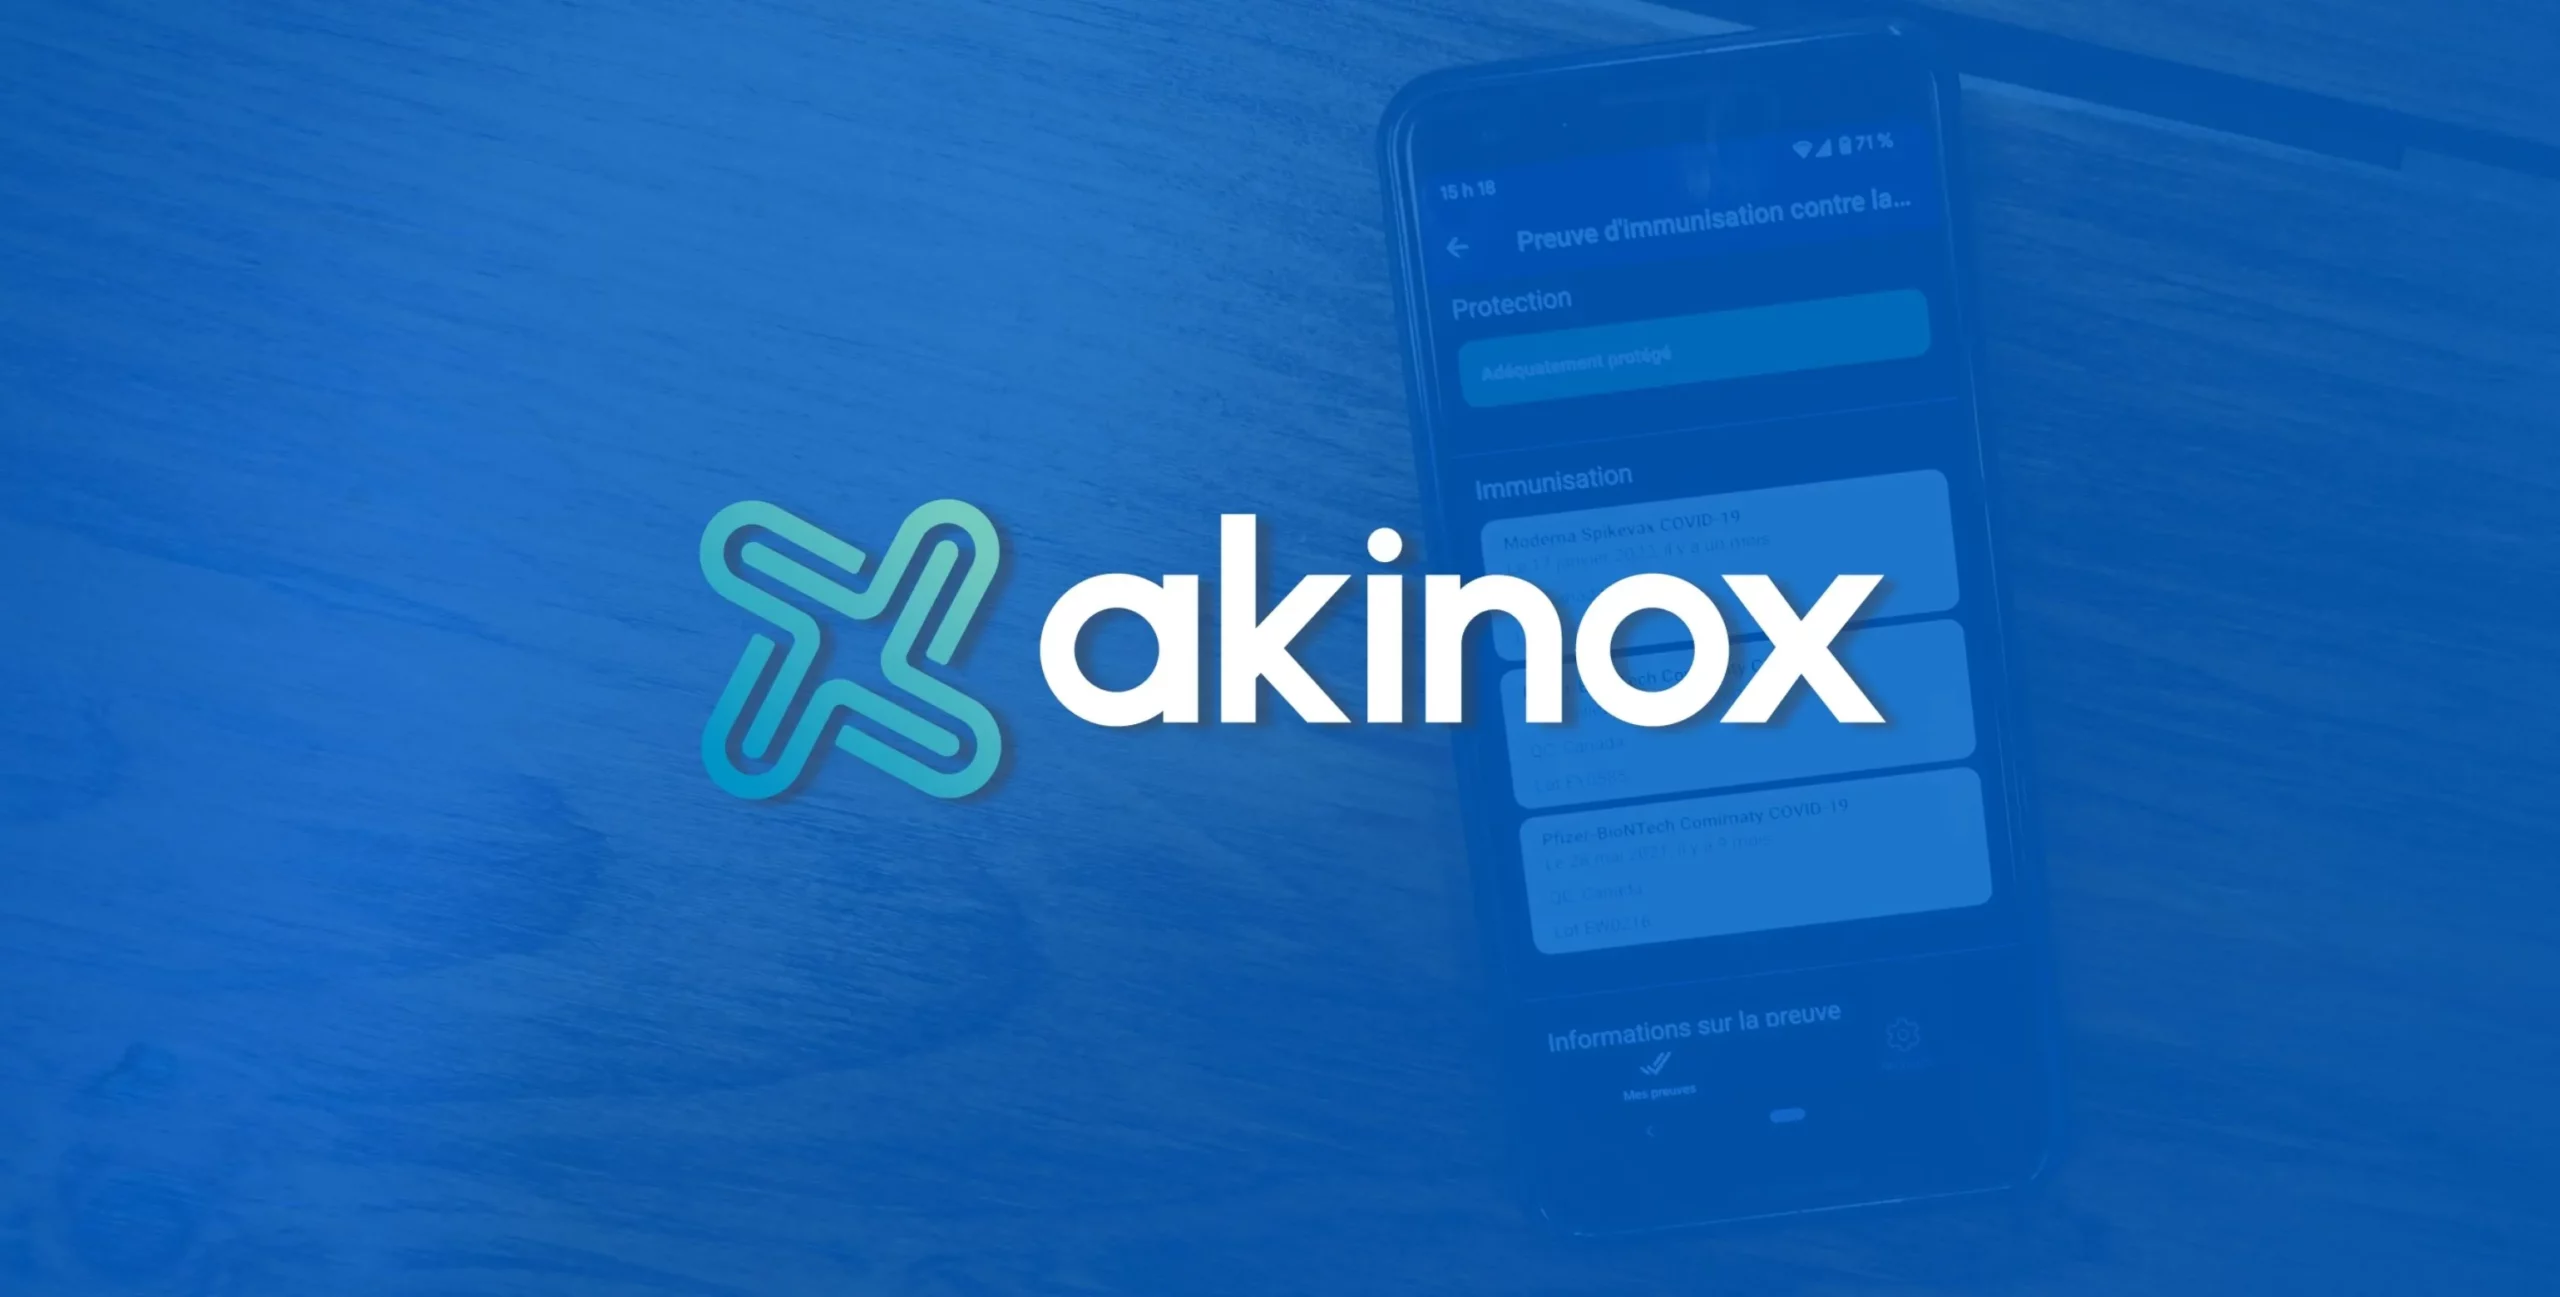 Akinox, Uzinakod's client